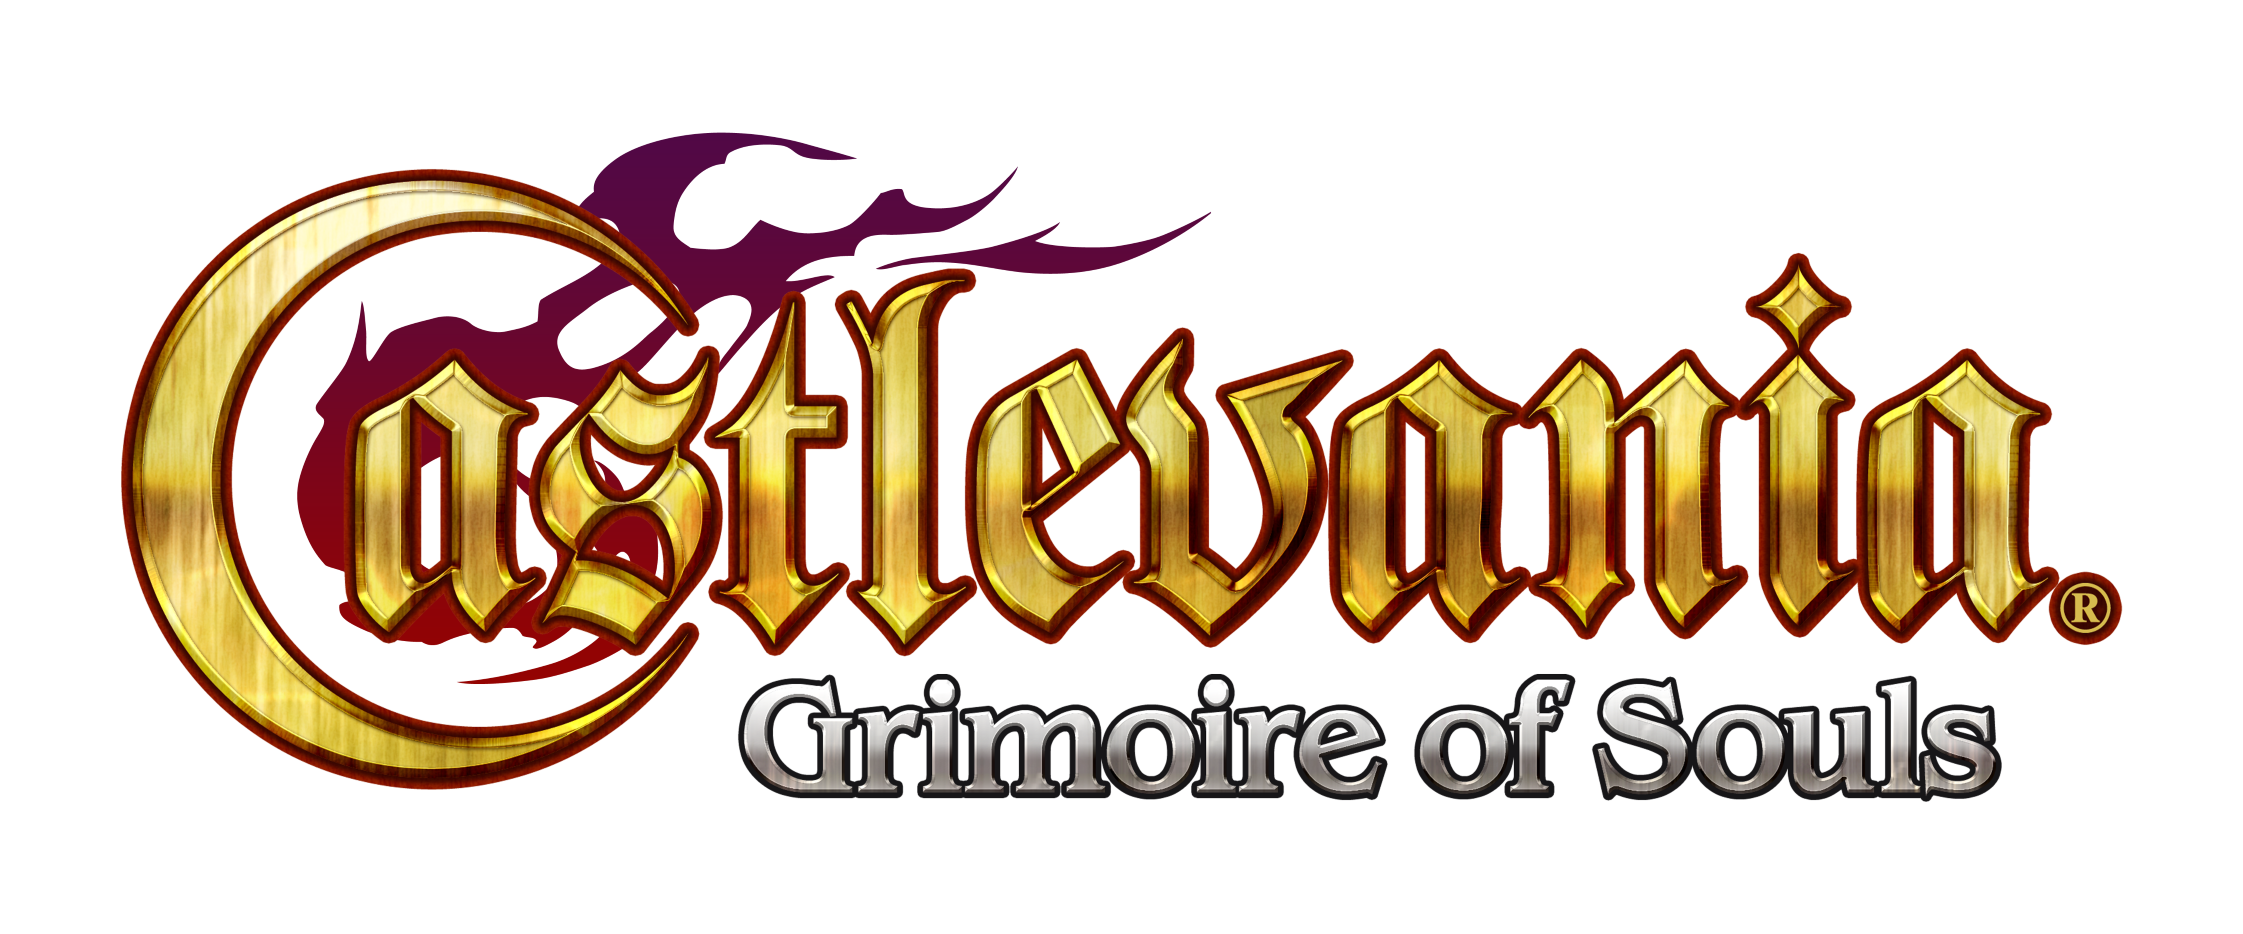 Castelvania: Grimoire Of Souls in esclusiva su Apple Arcade